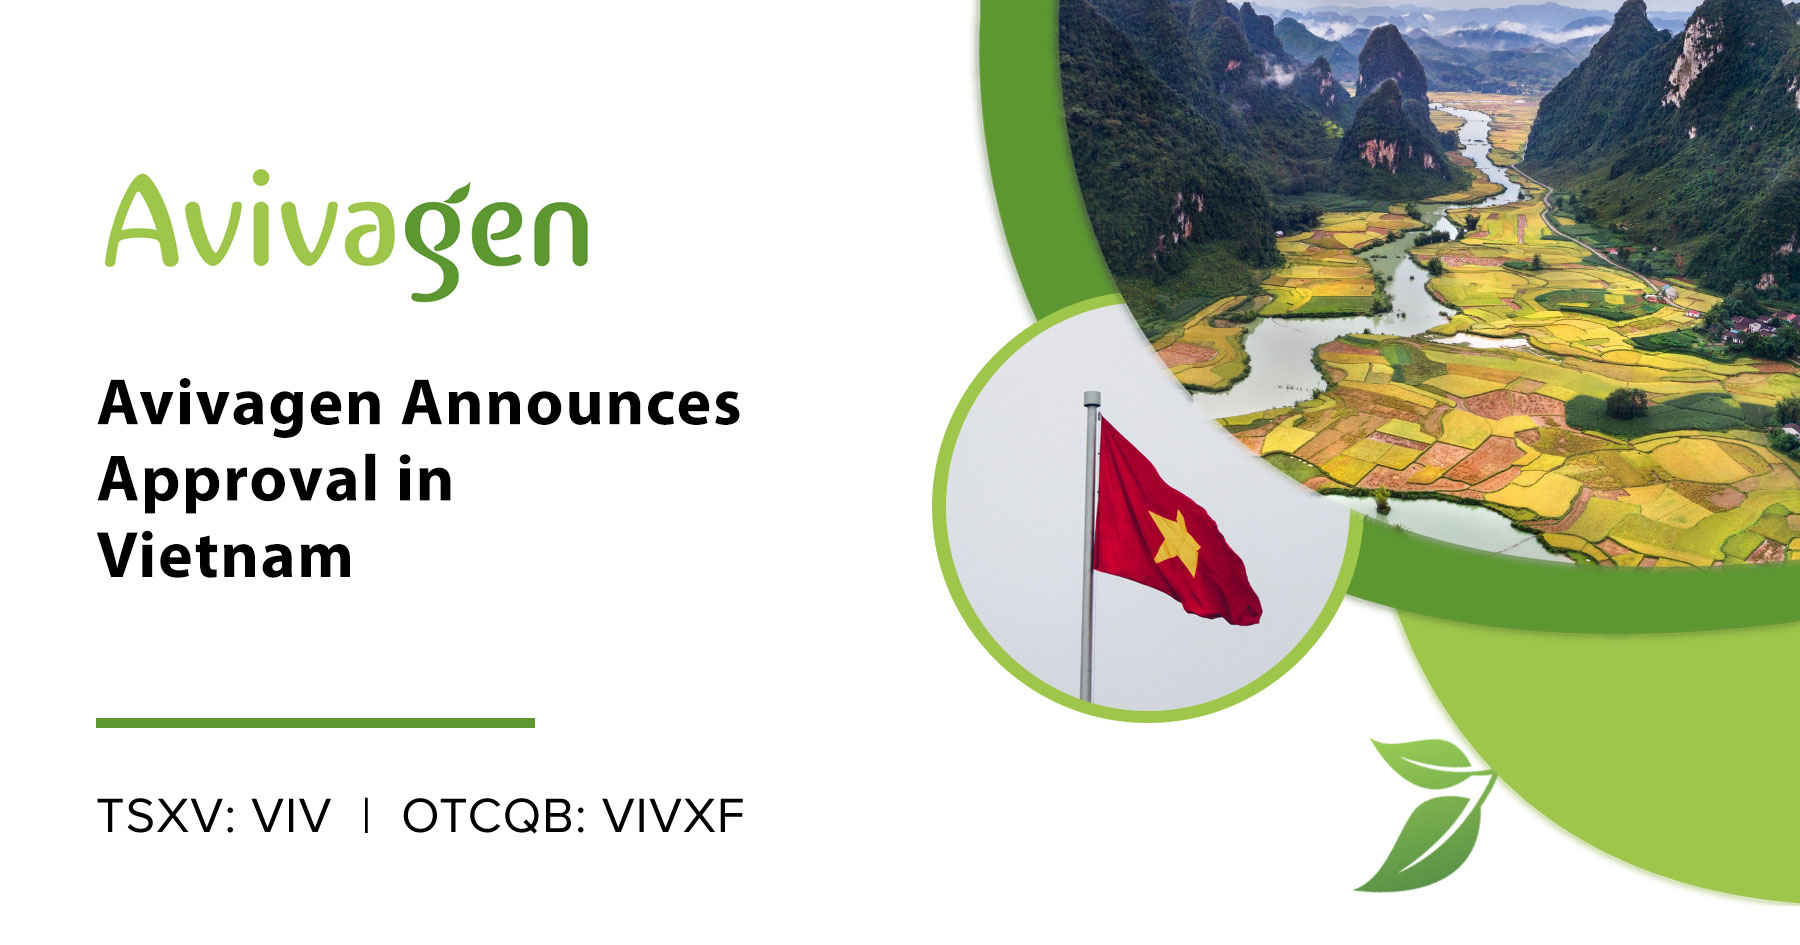 Avivagen announces approval in Vietnam